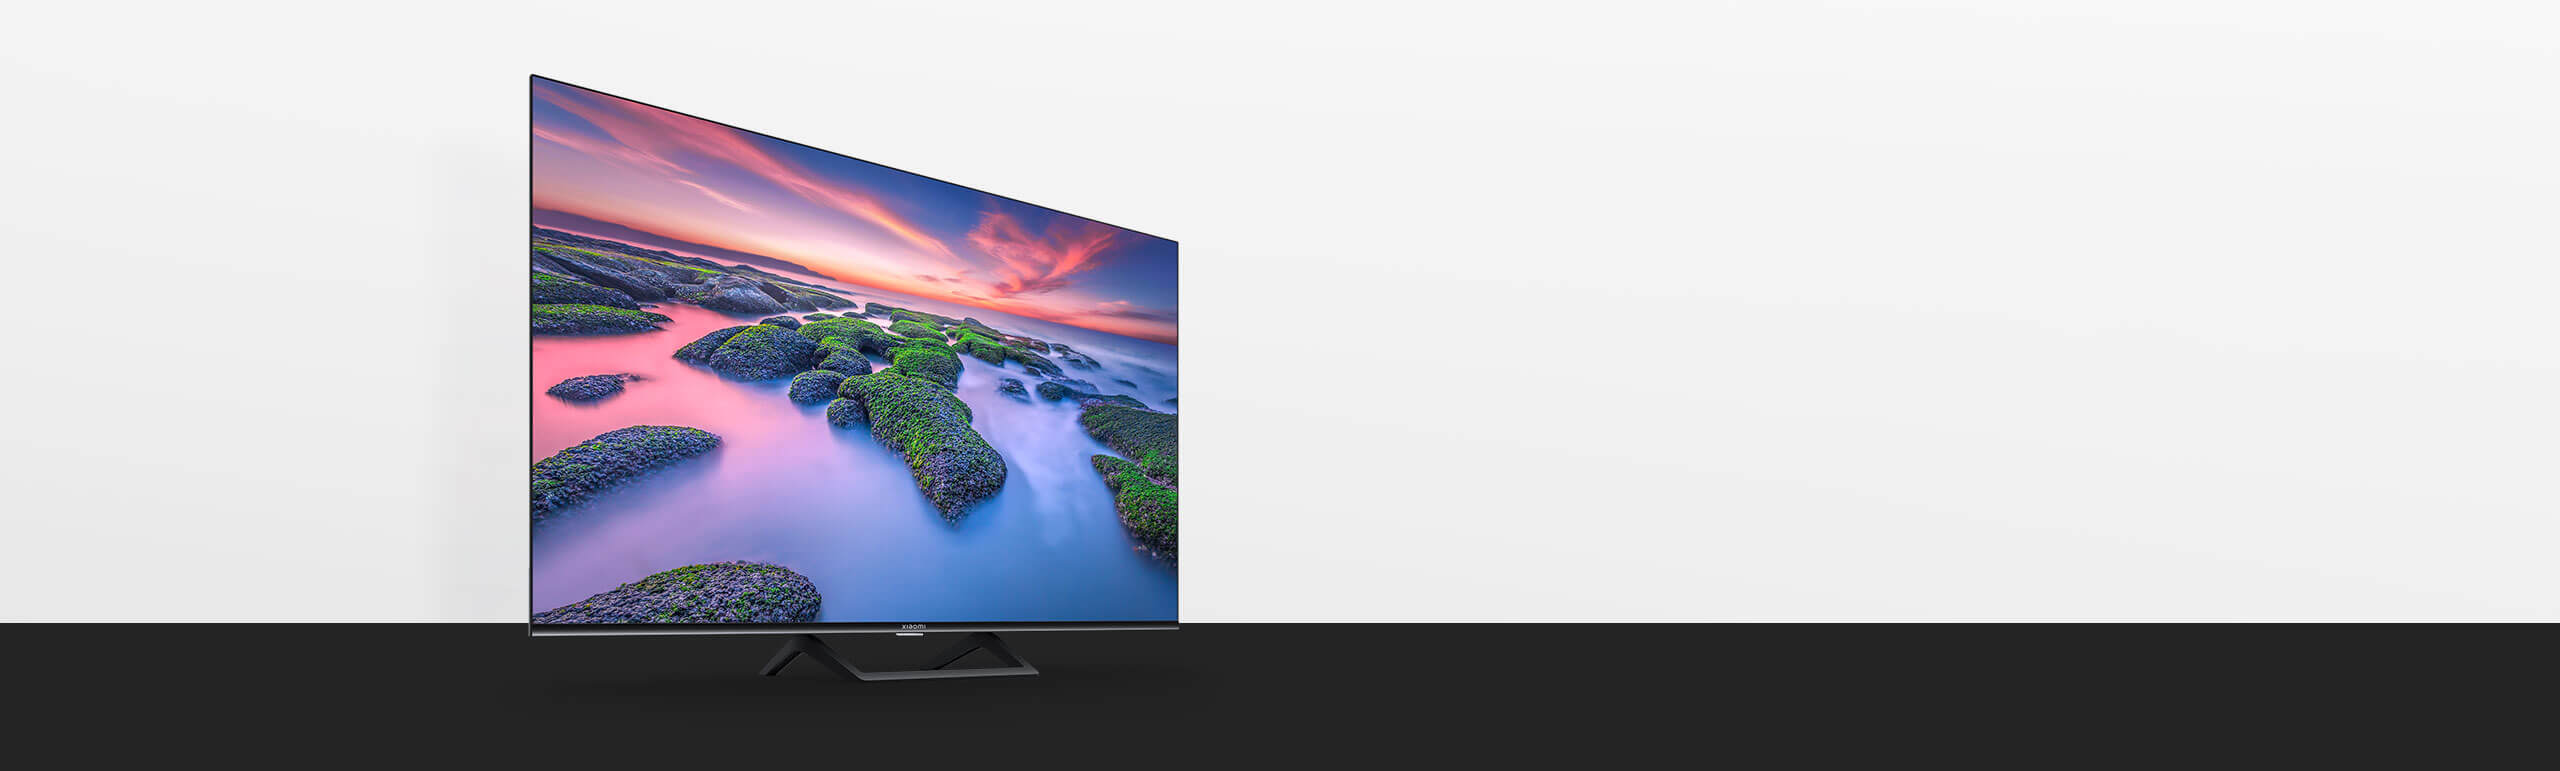 Телевизор xiaomi mi tv a2 65 led. Xiaomi a2 телевизор. Xiaomi a2 43 телевизор. 43" Телевизор Xiaomi mi TV a2. 55" Телевизор Xiaomi mi TV a2.